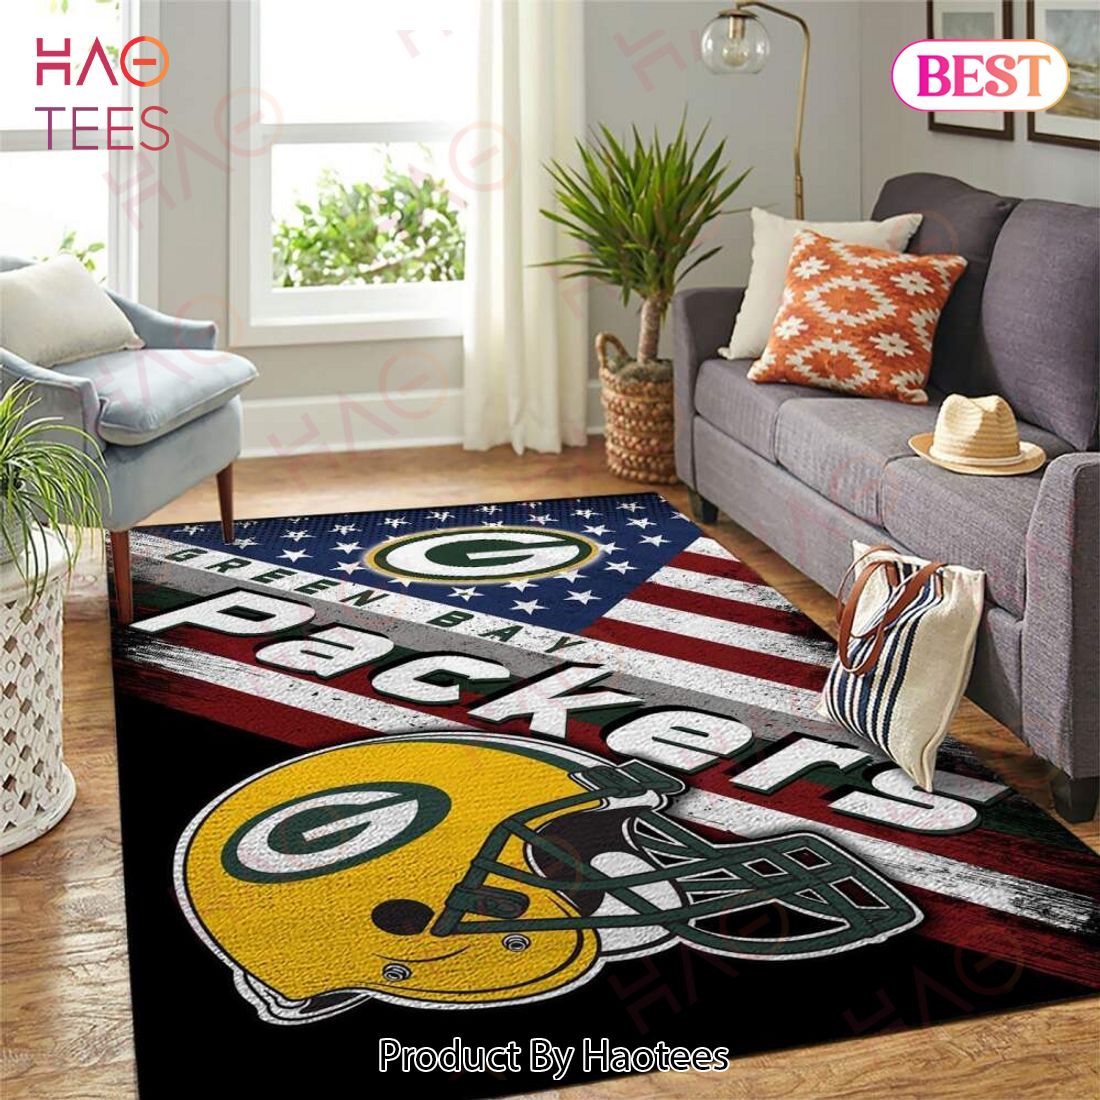 Green Bay Packers Nfl Area Rugs Team Logo American Flag Style Living Room Carpet Sports Rug Regtangle Carpet Floor Decor Home Decor